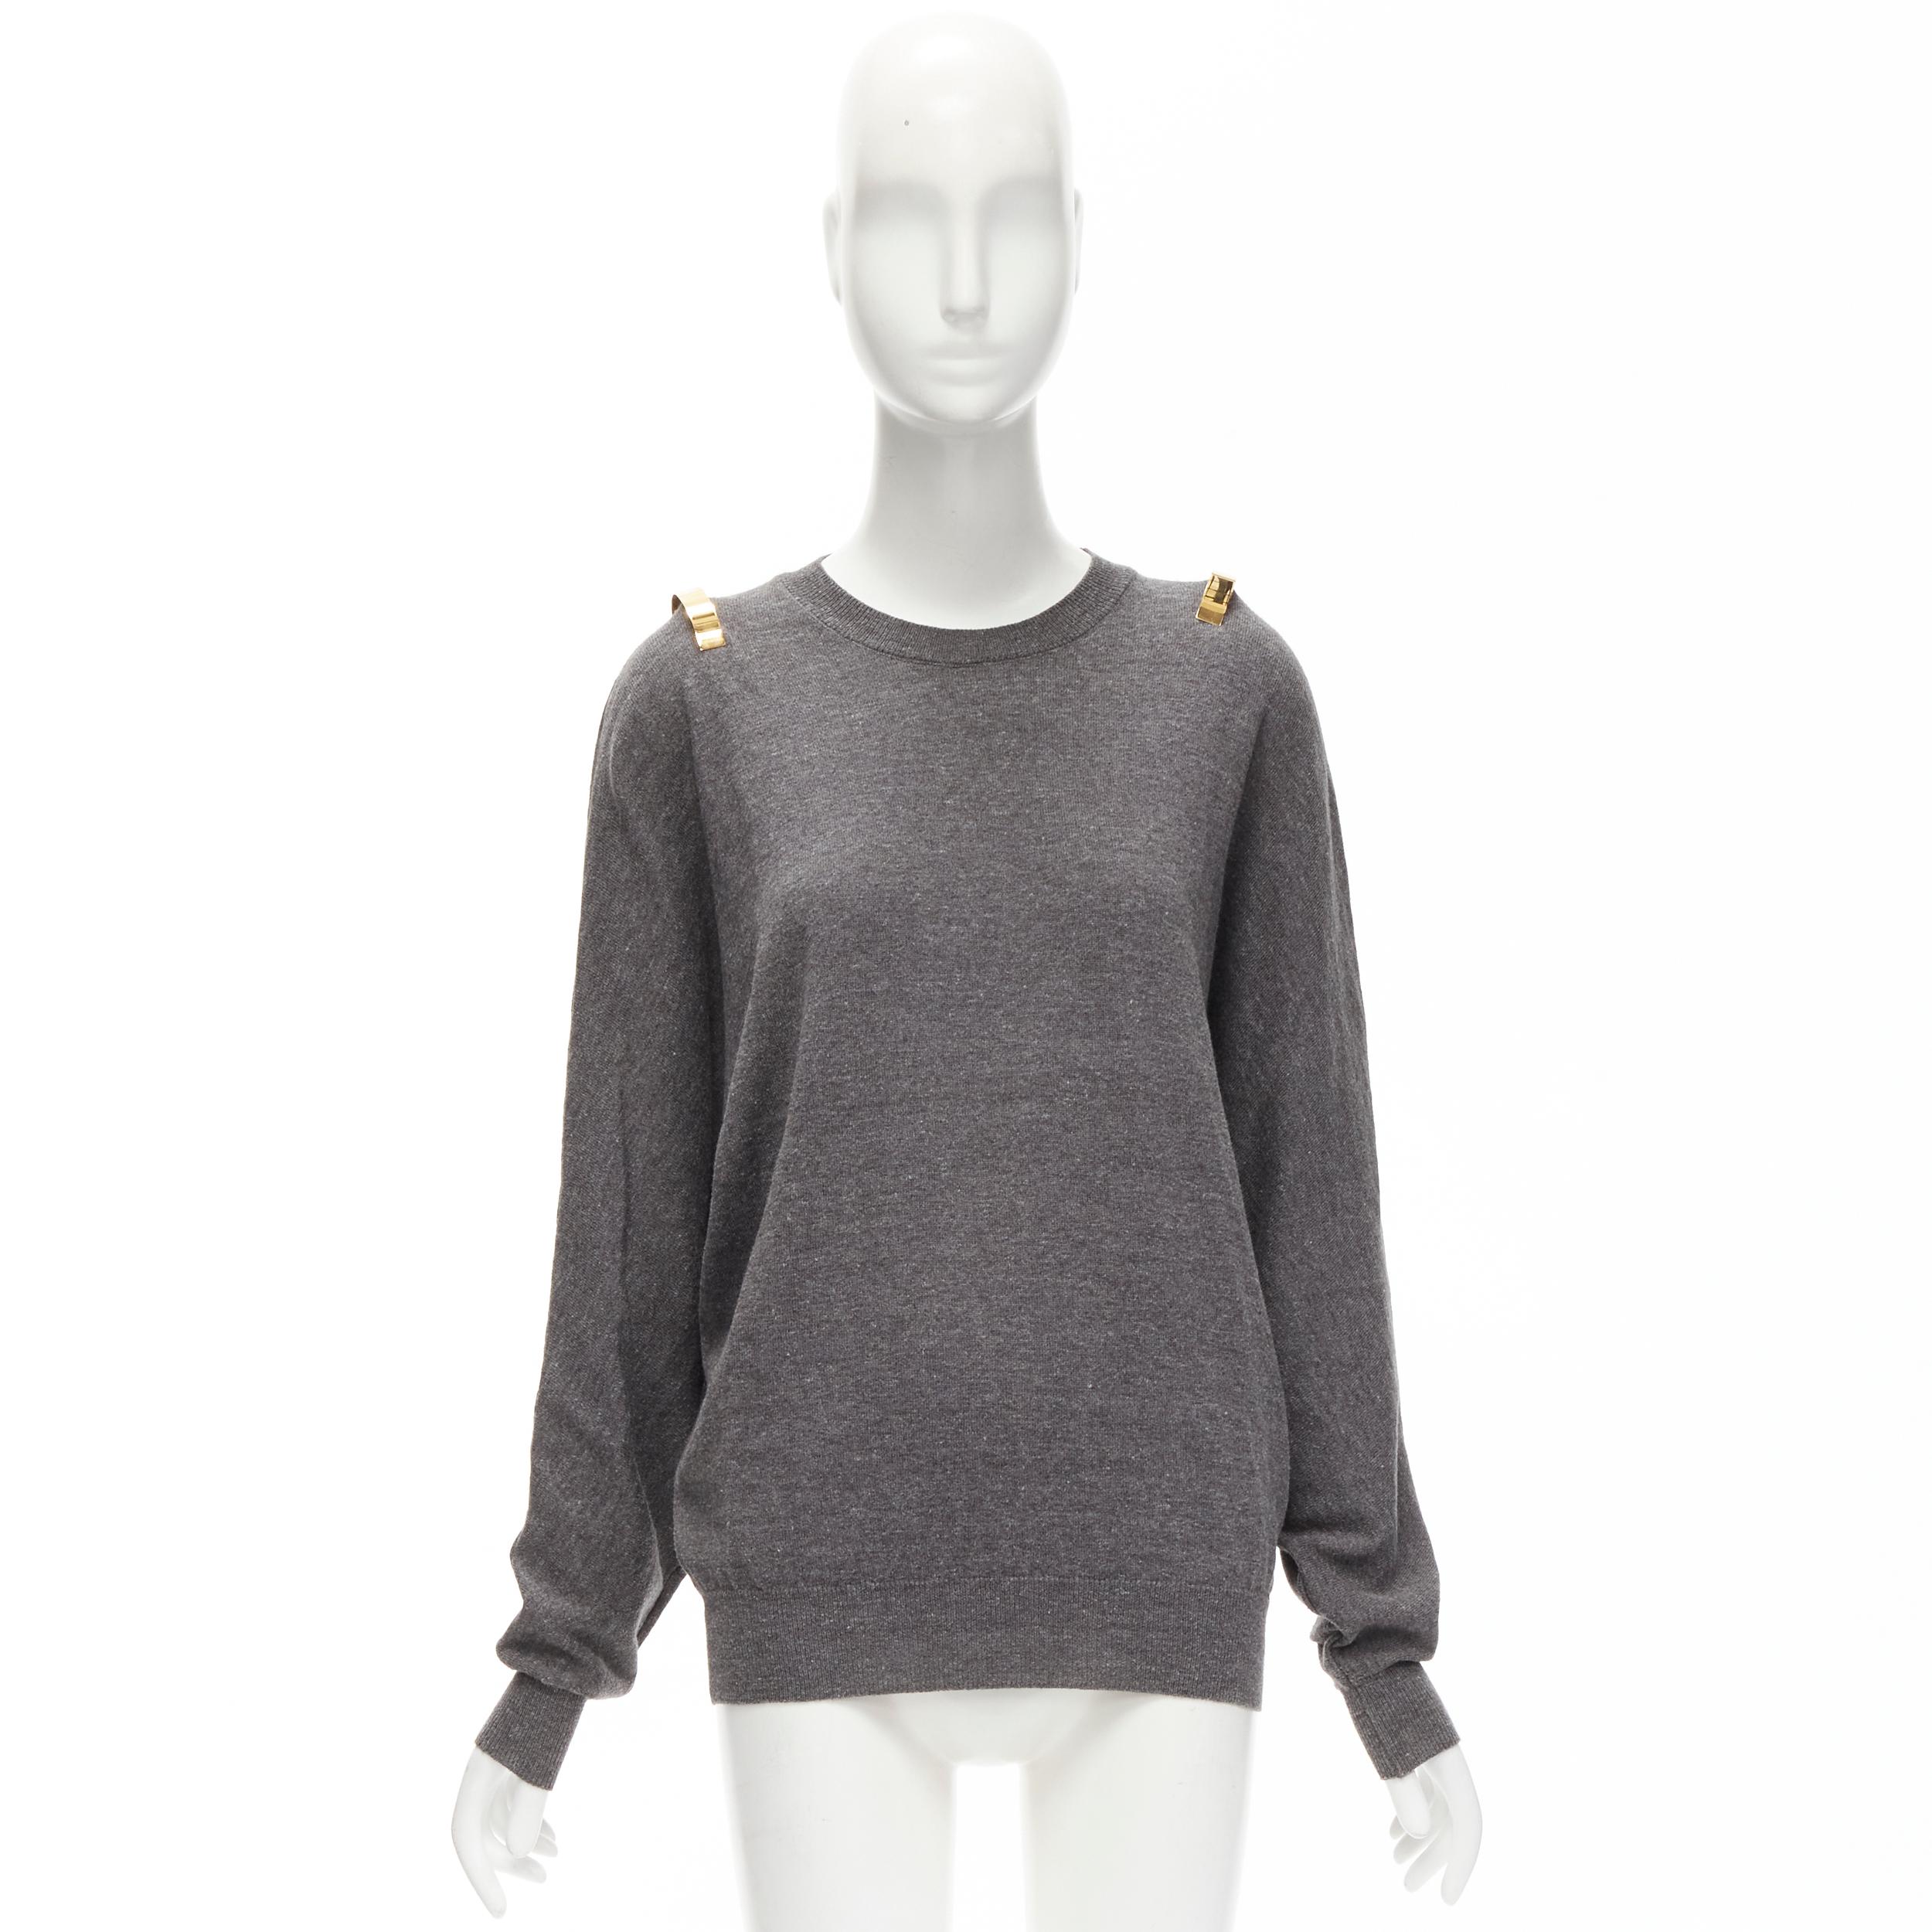 GIVENCHY Riccardo Tisci gold metal shoulder bar cuff grey wool alpaca sweater S For Sale 5